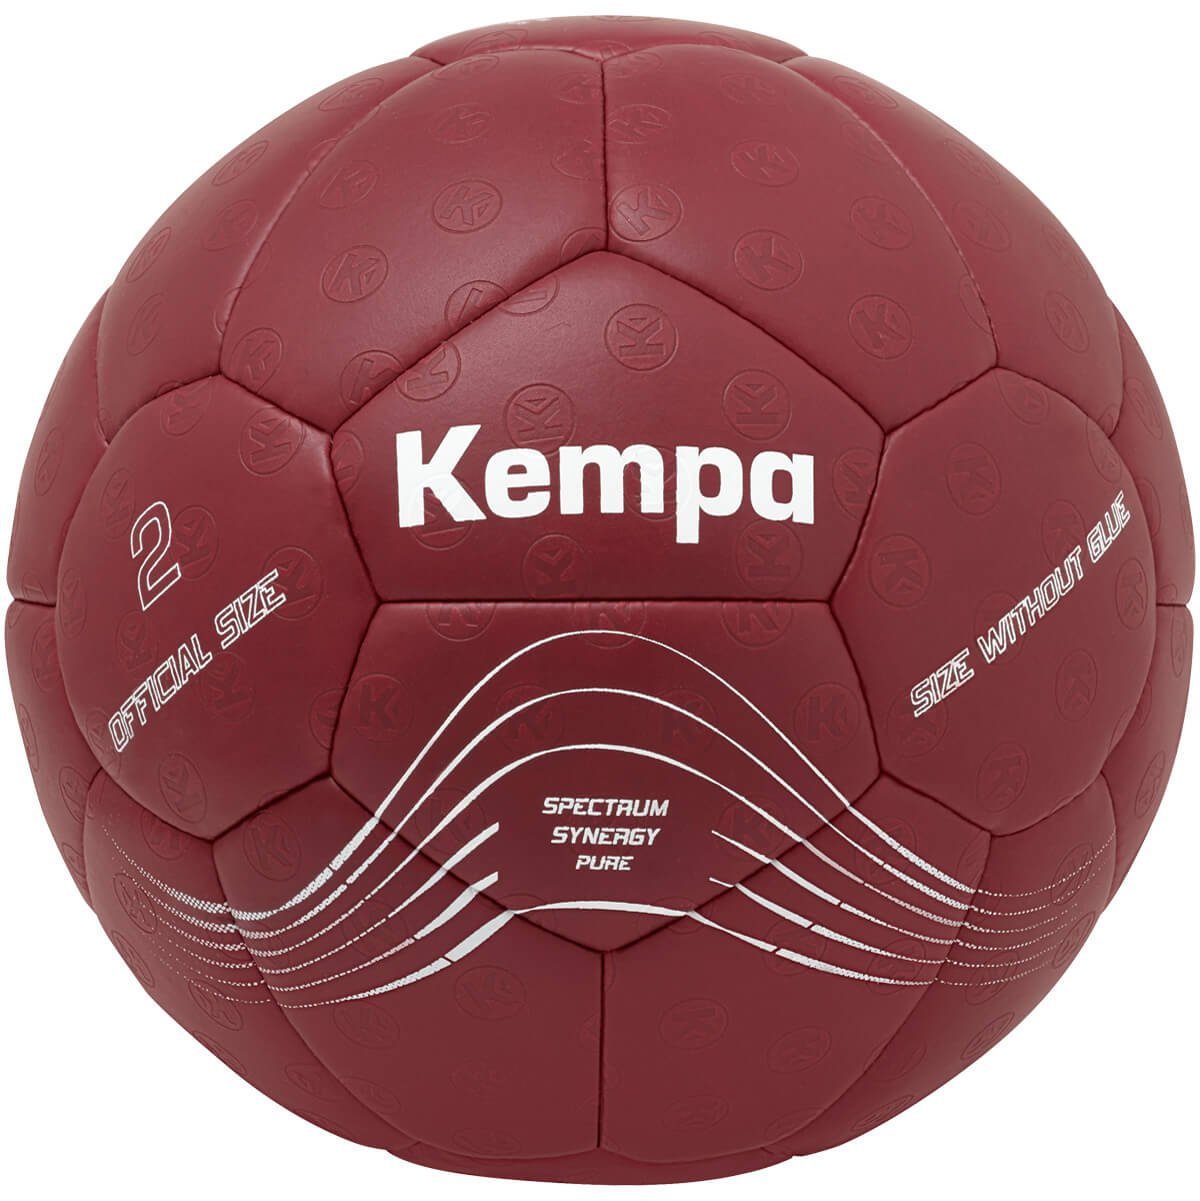 Kempa Handball Handball Spectrum Synergy Pure